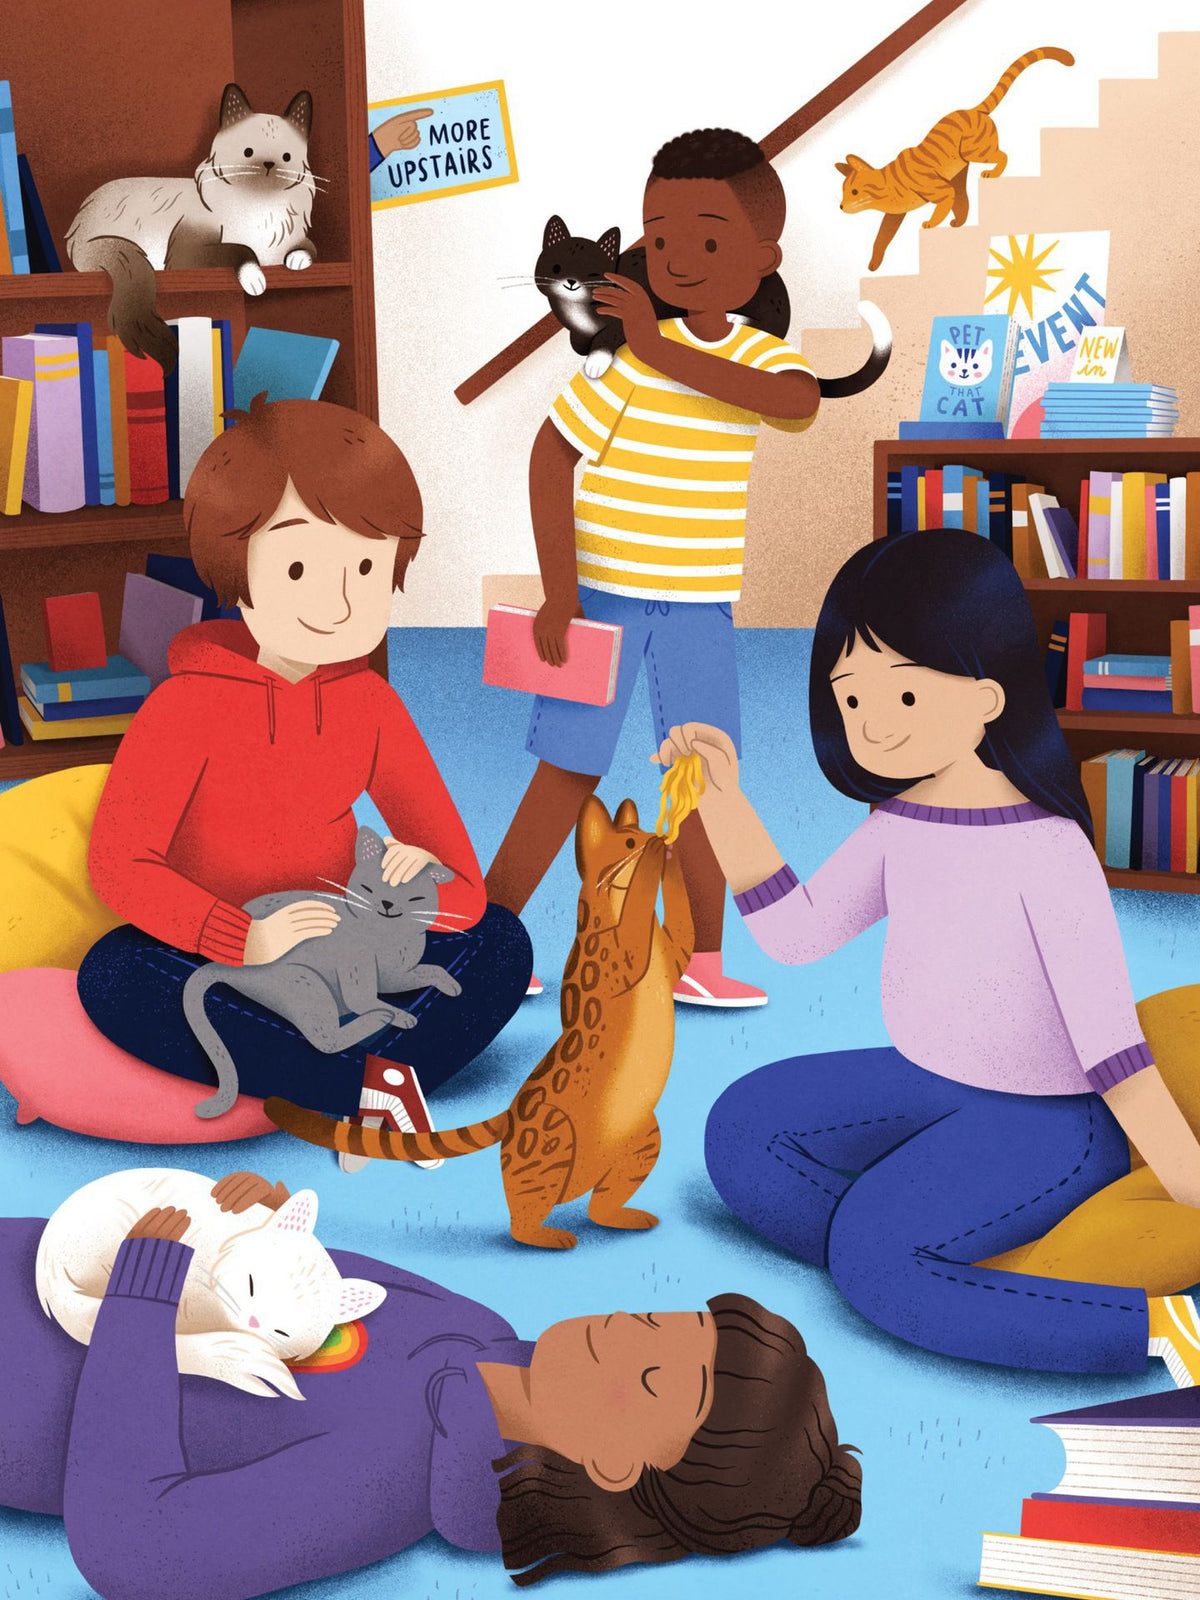 Pet That Cat: Handbook for making Feline Friends